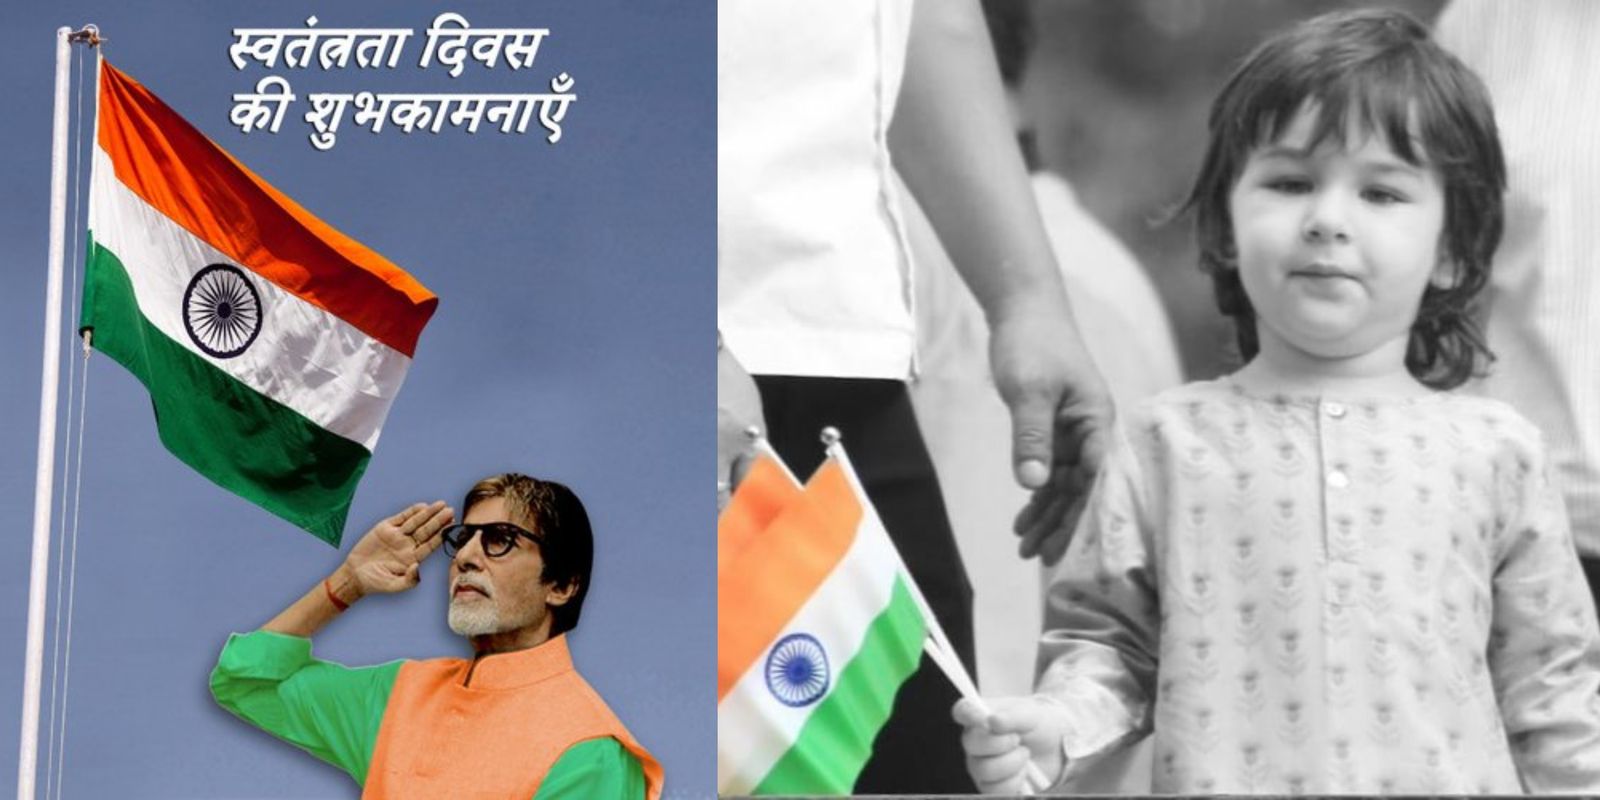 Happy Independence Day 2020: Amitabh Bachchan, Karan Johar, Akshay Kumar And Other Celebs Wish Fans!